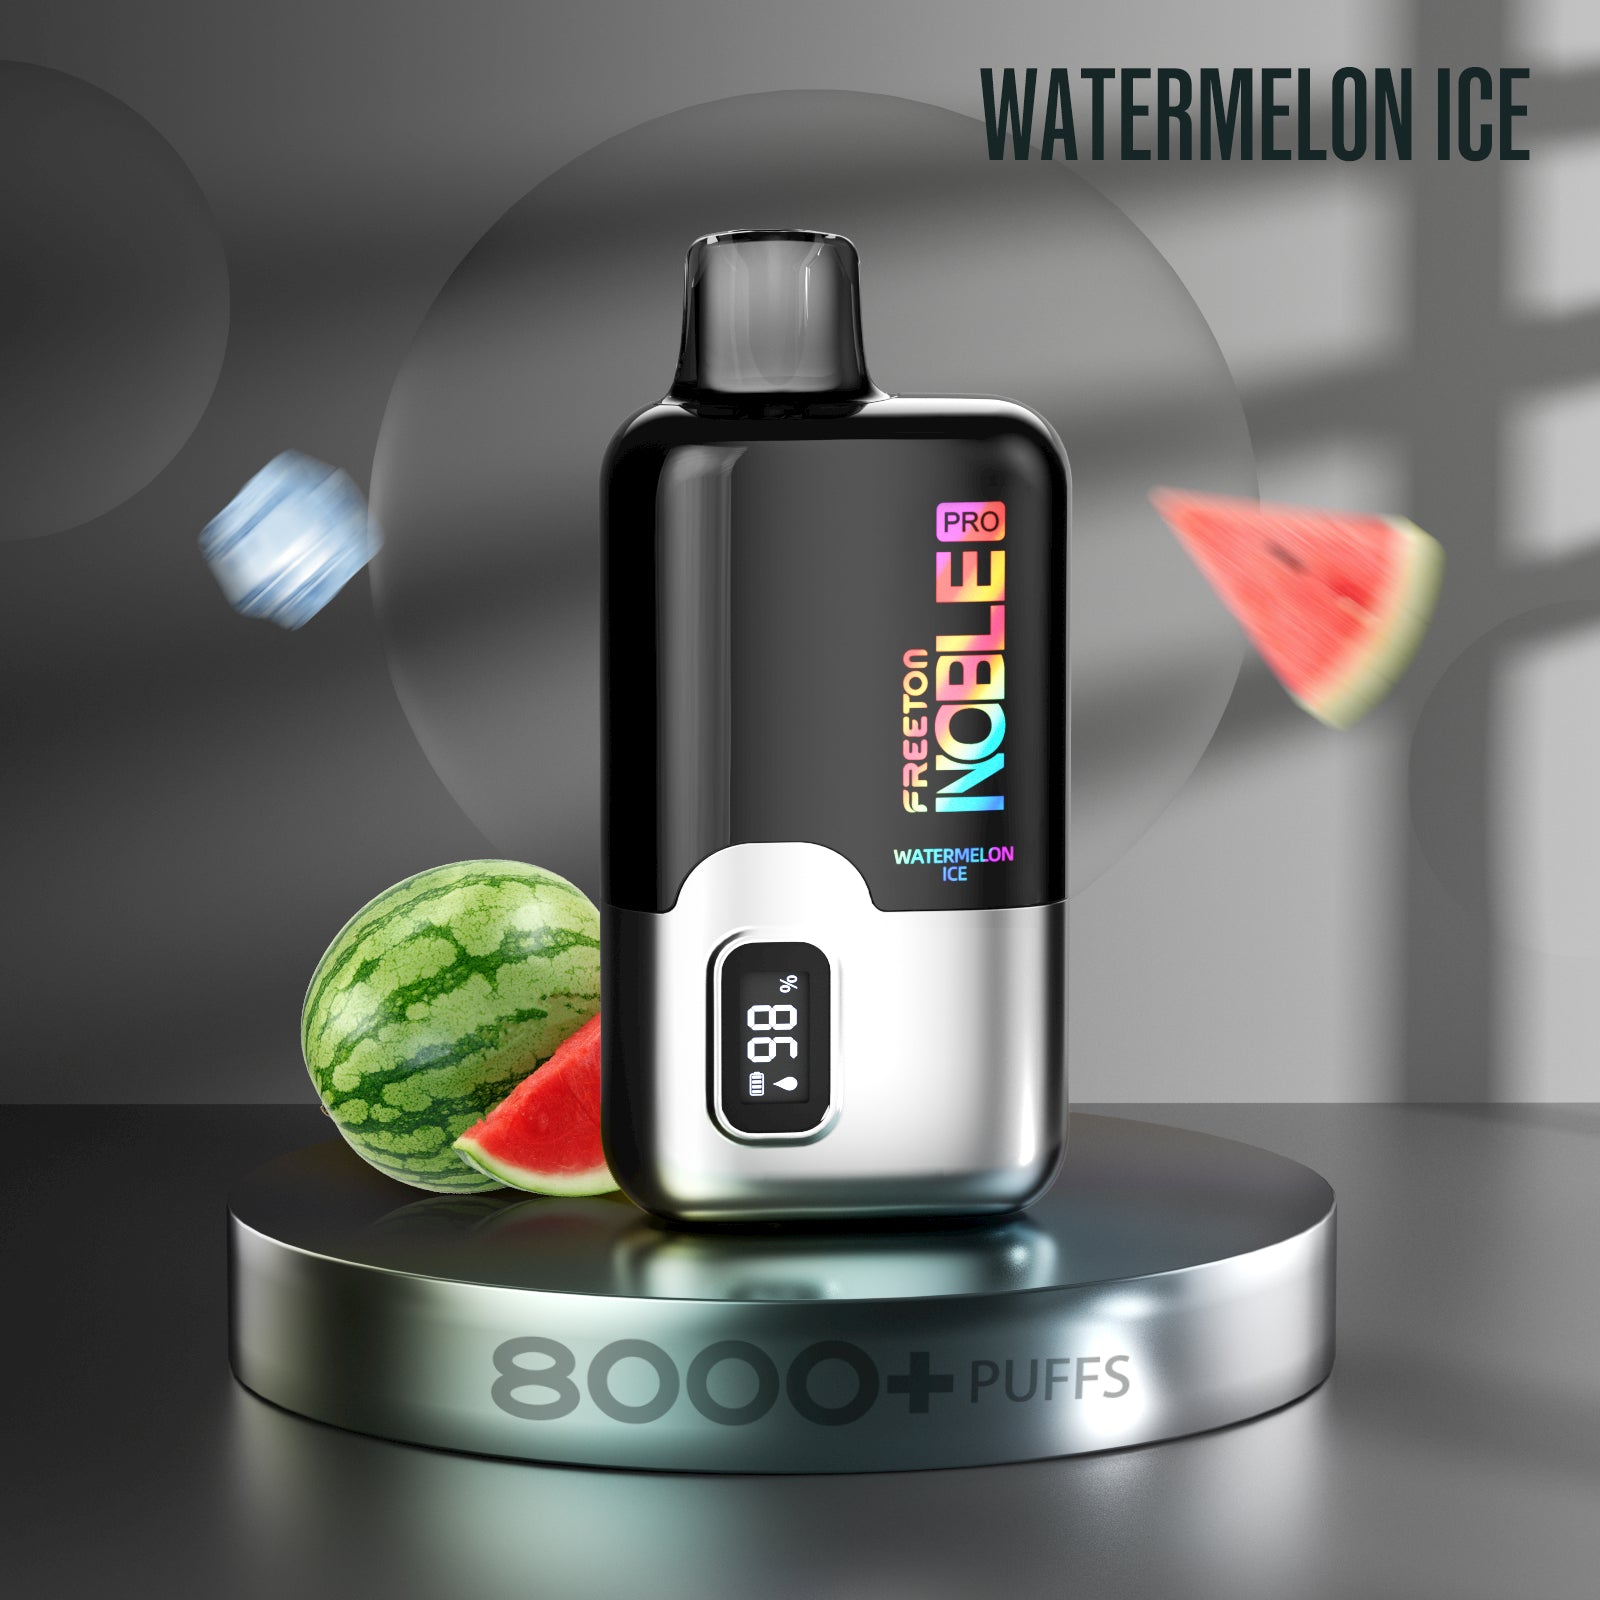 Freeton Noble Pro Watermelon Ice 8000+ Puffs